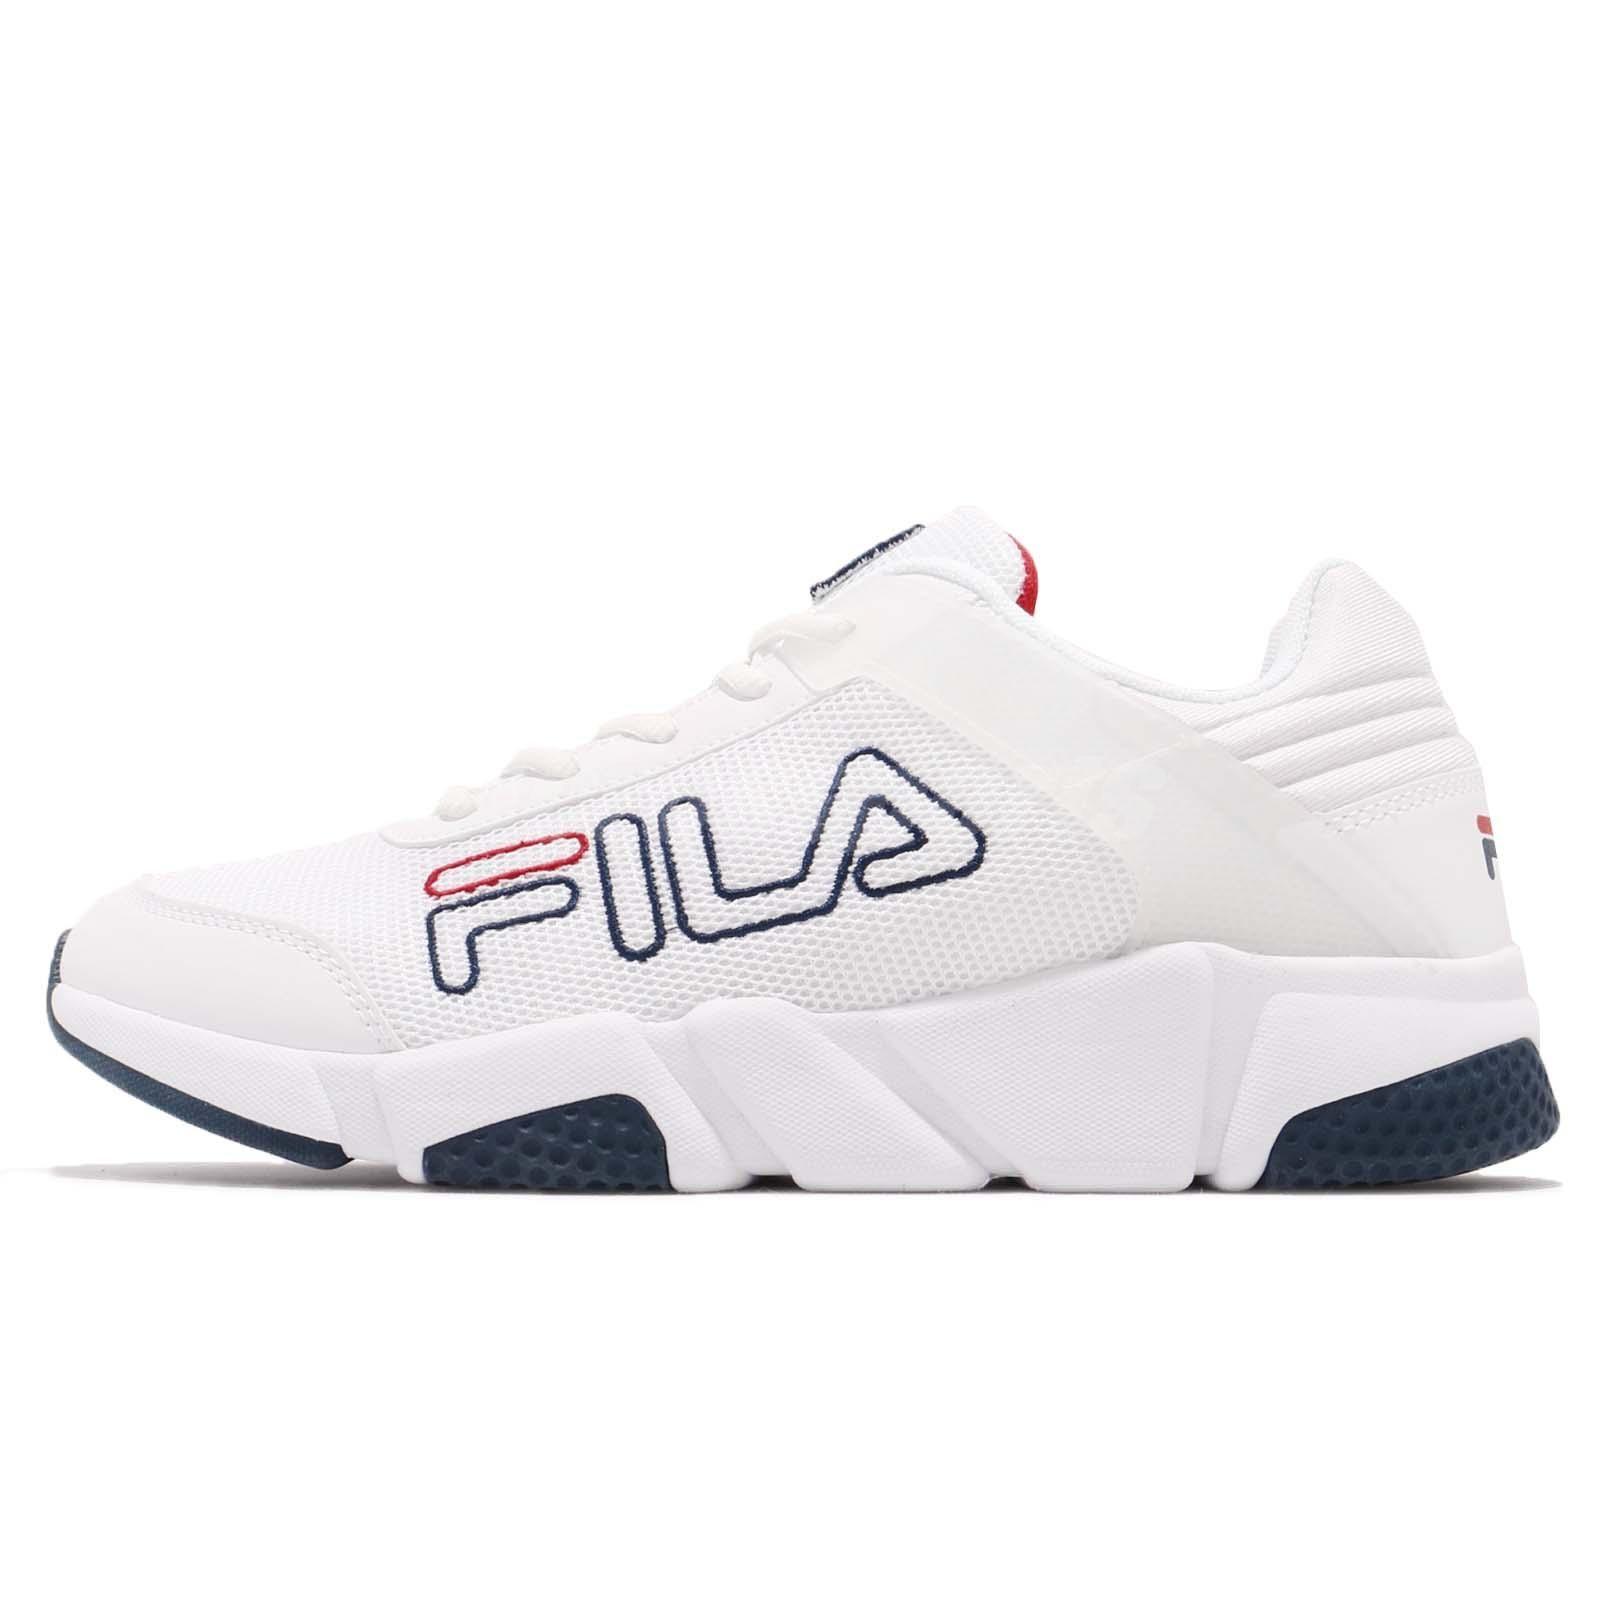 White and Blue Shoe Brand Logo - Fila J526S White Blue Red Big Logo Mens Athletic Running Shoes